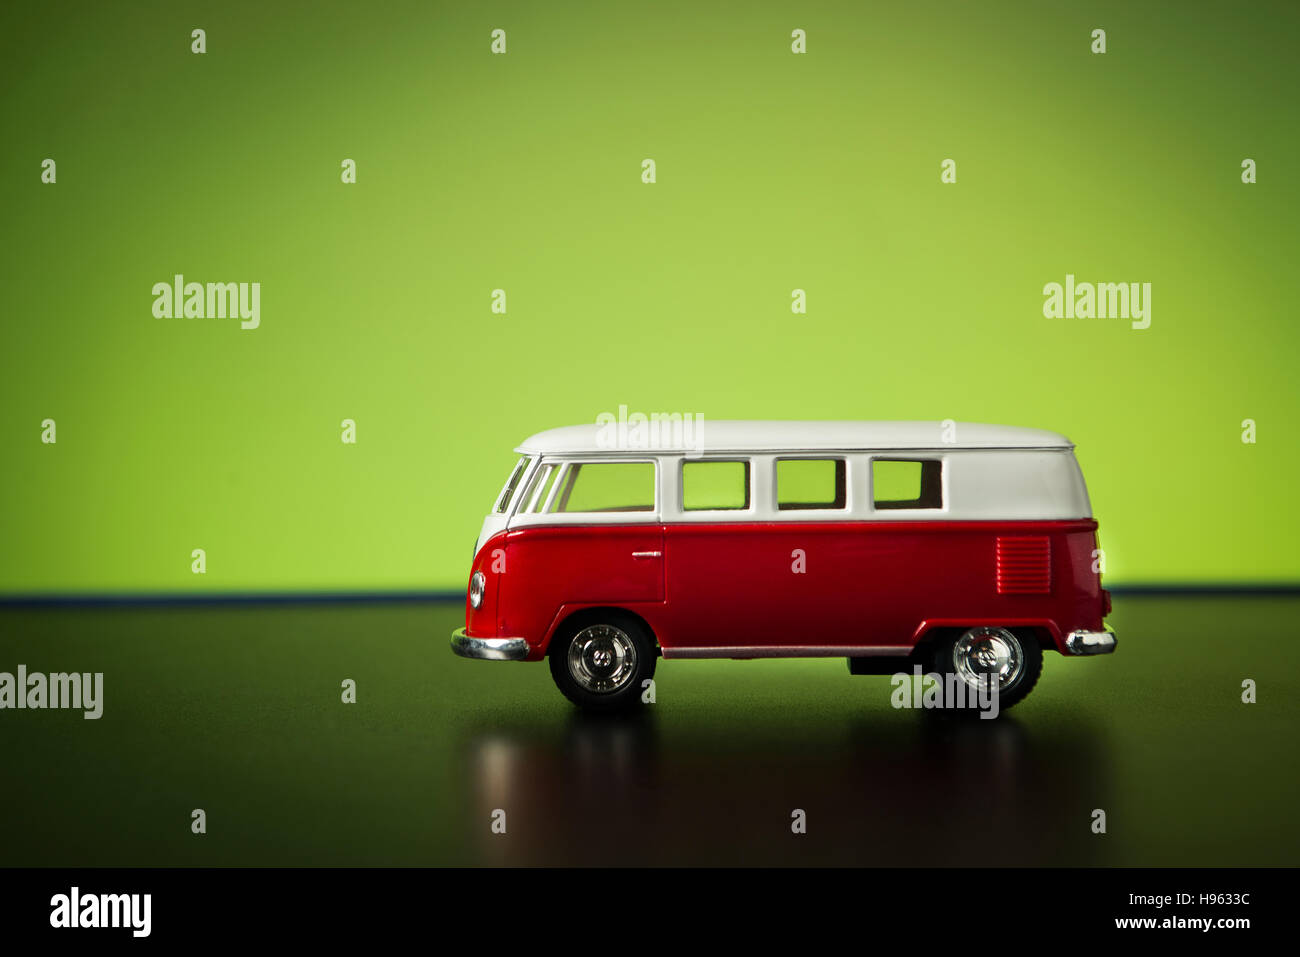 Izmir, Turkey - July 23, 2015. Volkswagen microbus toy car on a green background. Stock Photo